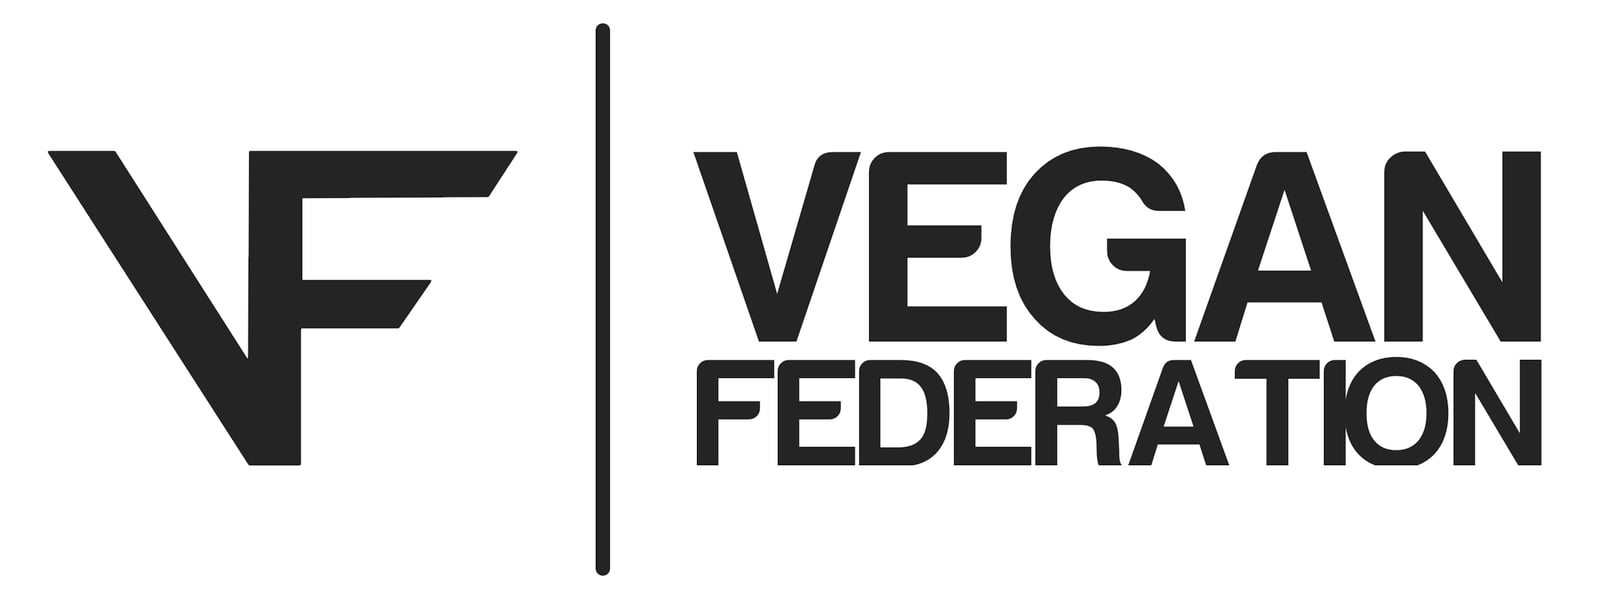 The Vegan Federation